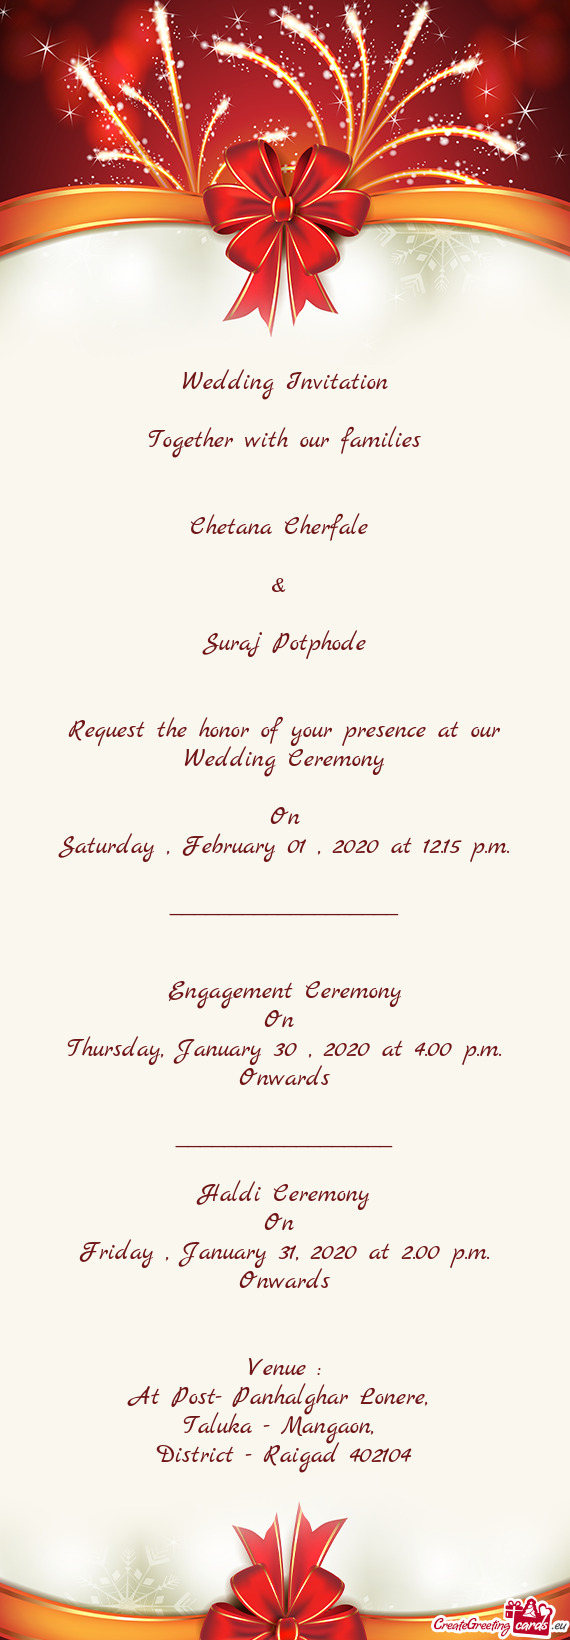 Wedding Invitation
 
 Together with our families
 
 
 Chetana Cherfale 
 
 & 
 
 Suraj Potphode